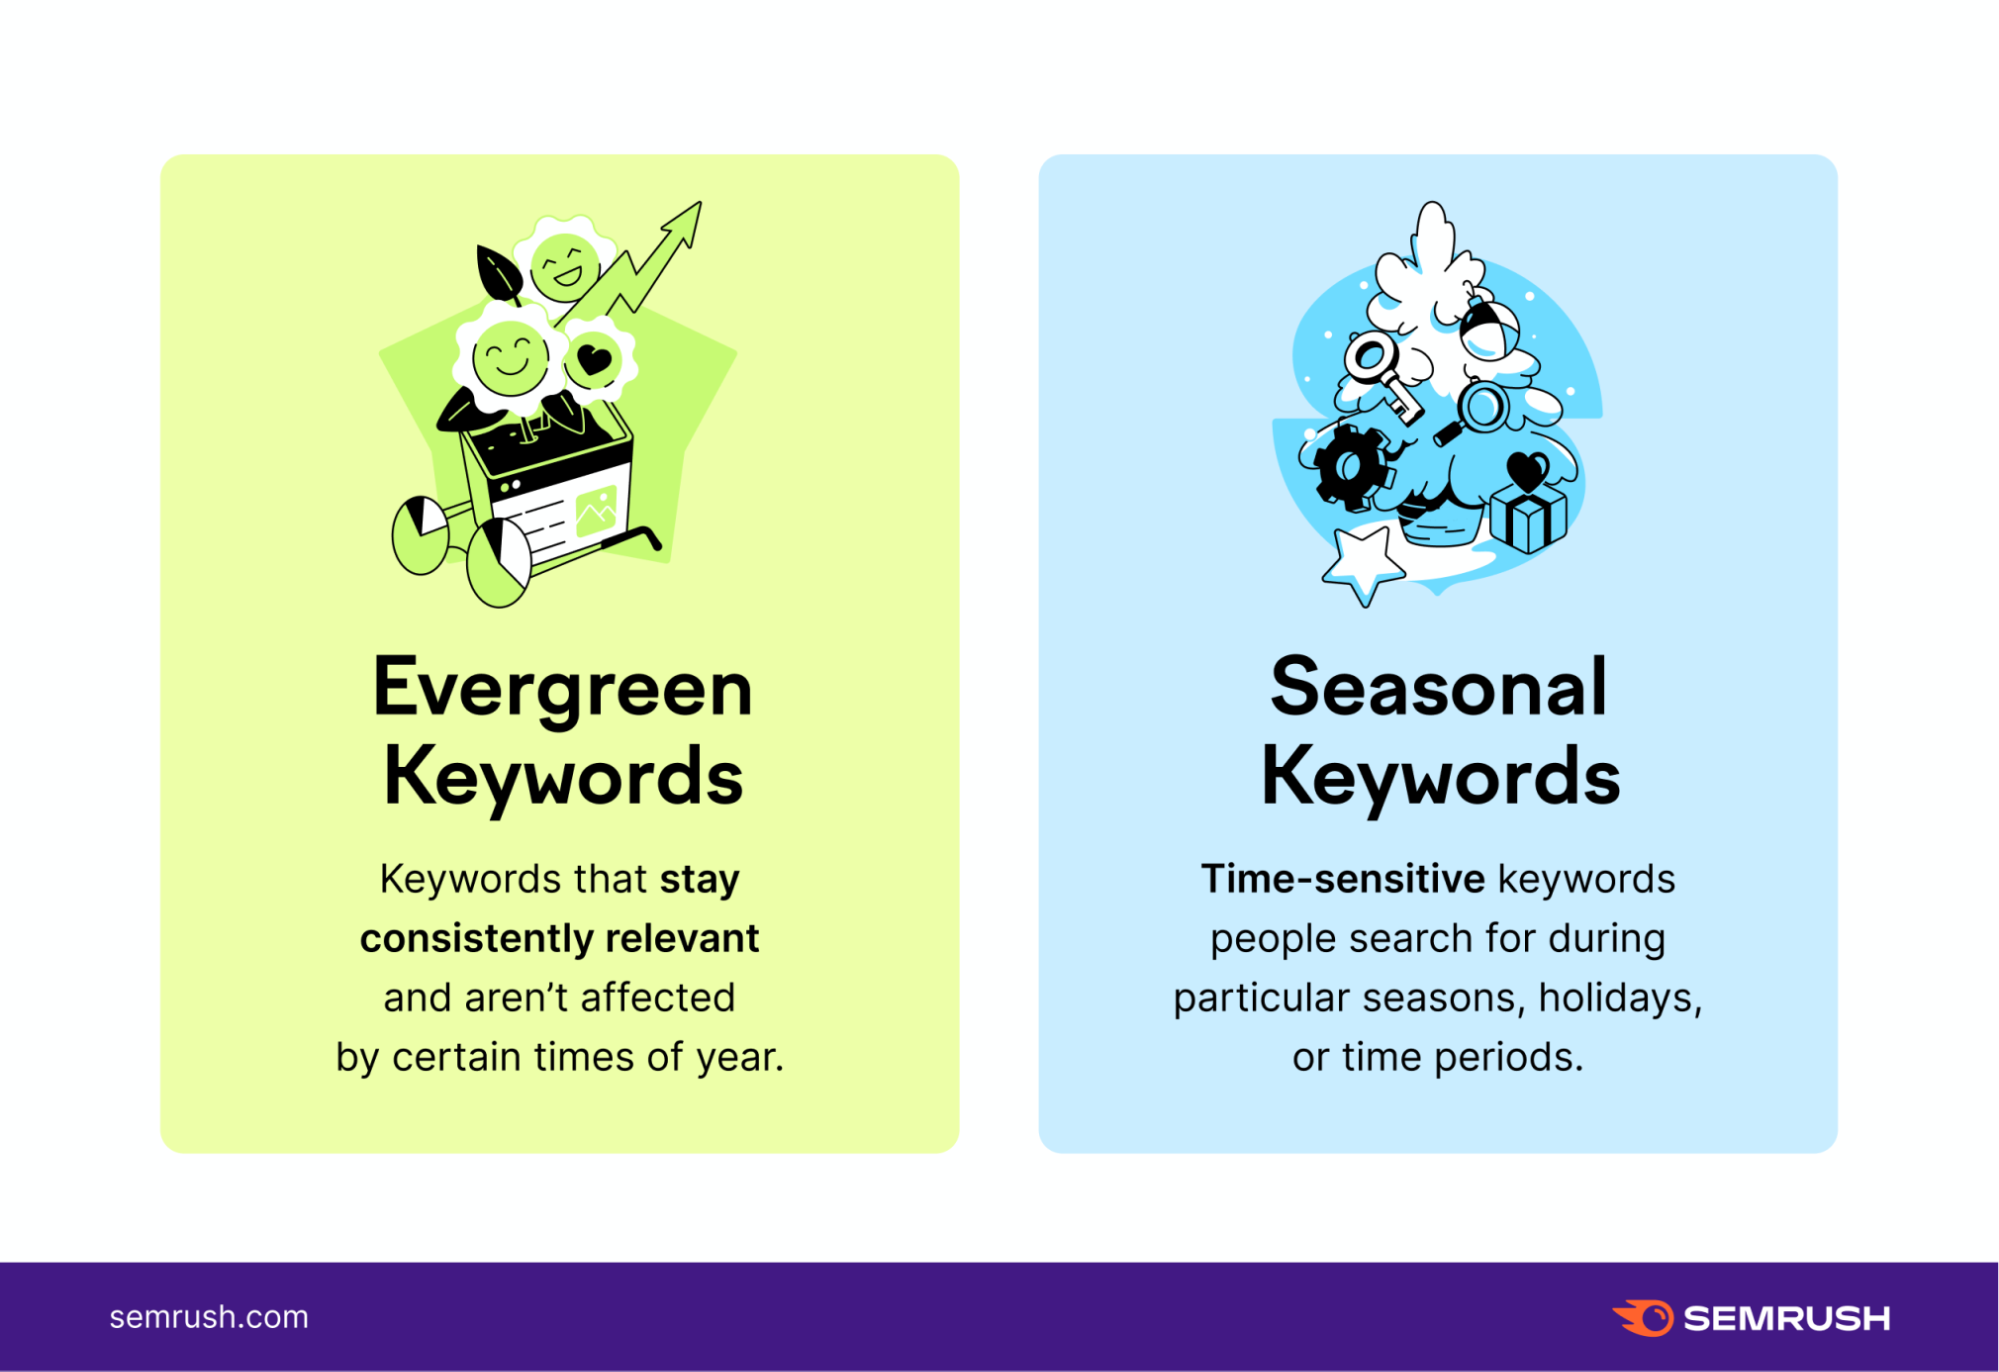 evergreen vs seasonal keywords infographic